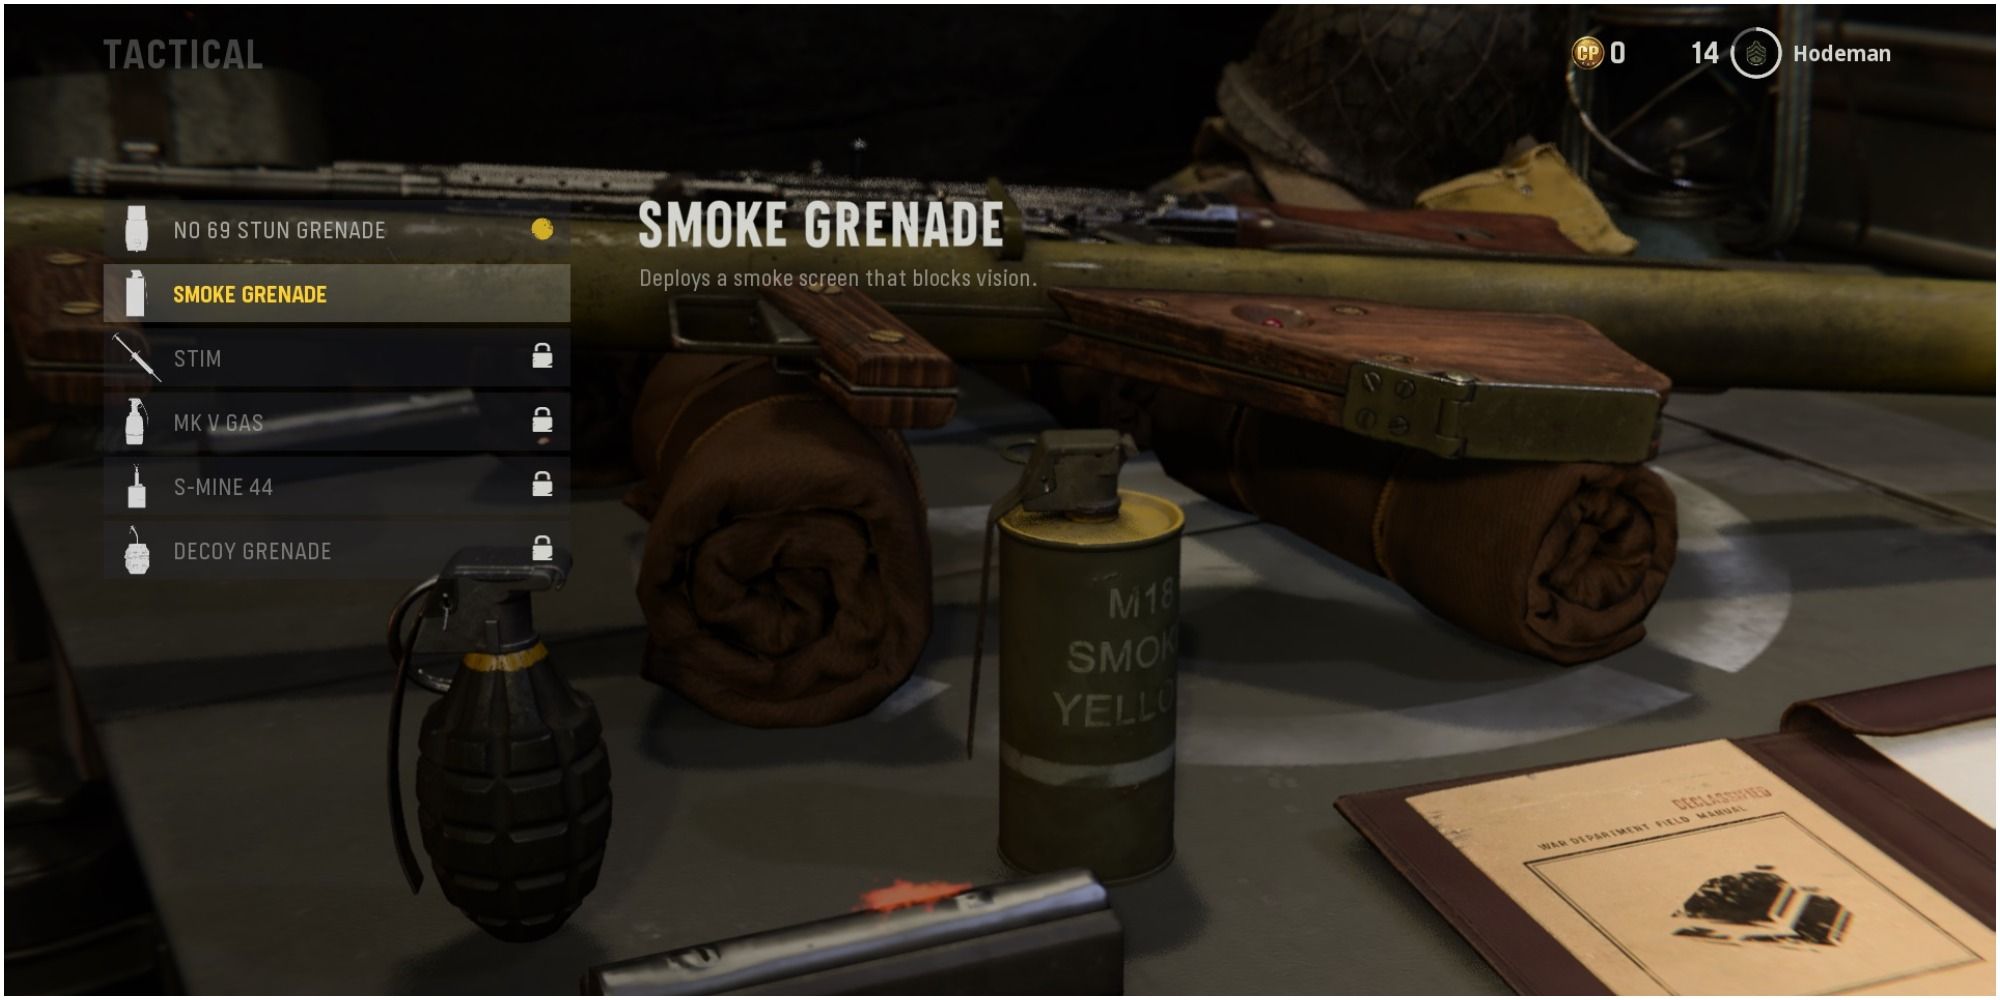 Call Of Duty Vanguard Description Of The Tactical Smoke Grenade